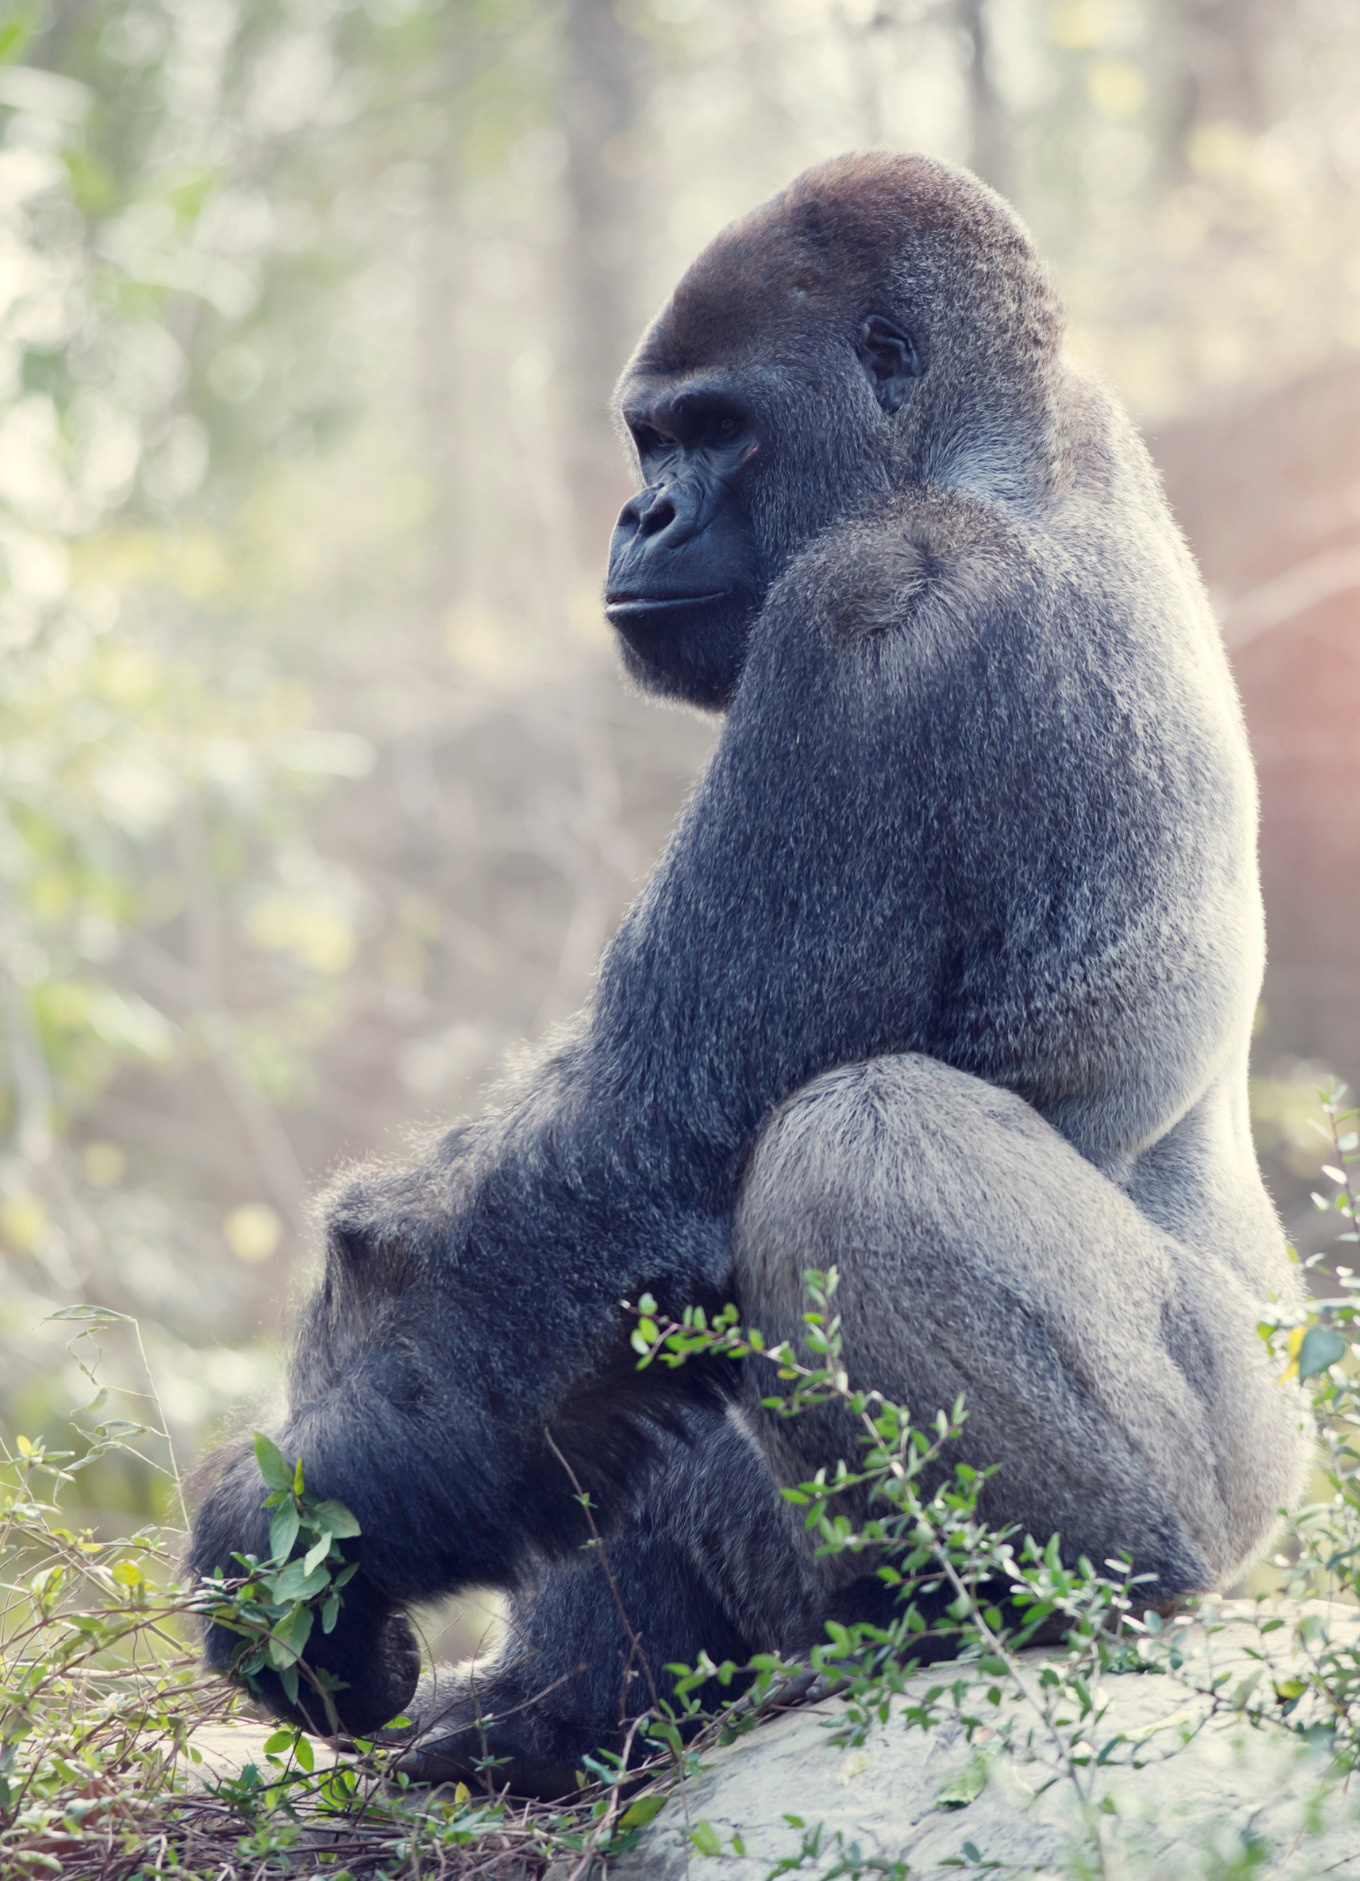 Stock photo of a black gorilla